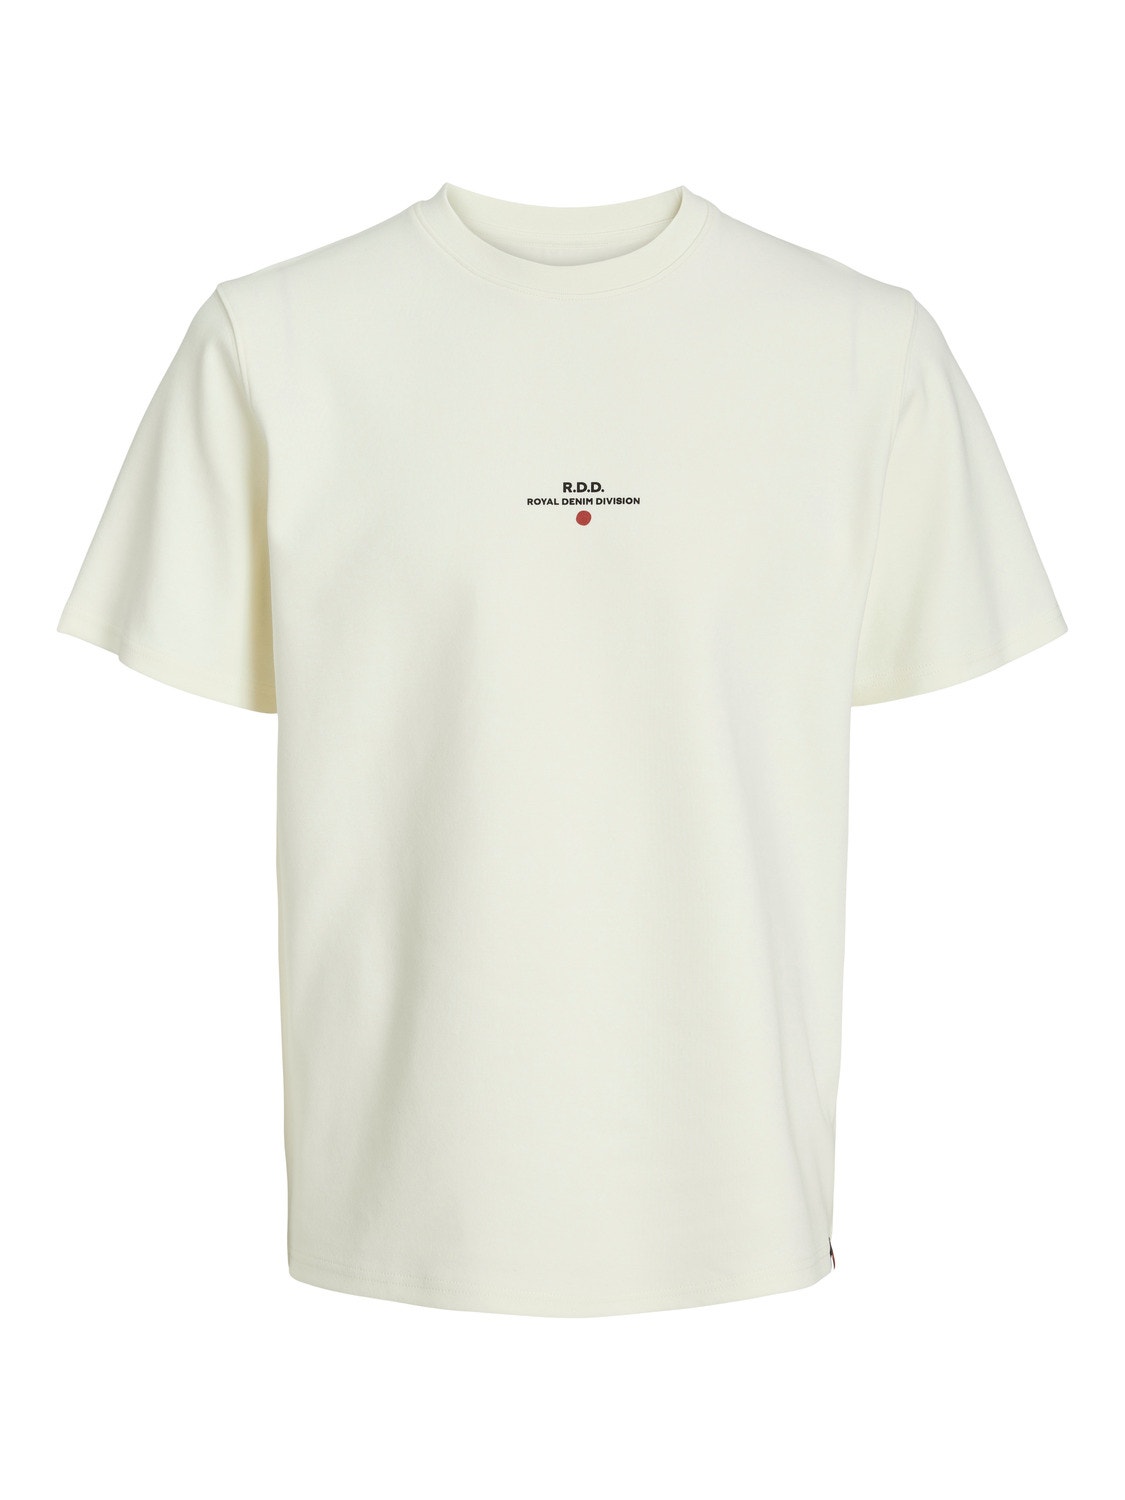 Jack & Jones RDD T-shirt Stampato Girocollo -Egret - 12243500